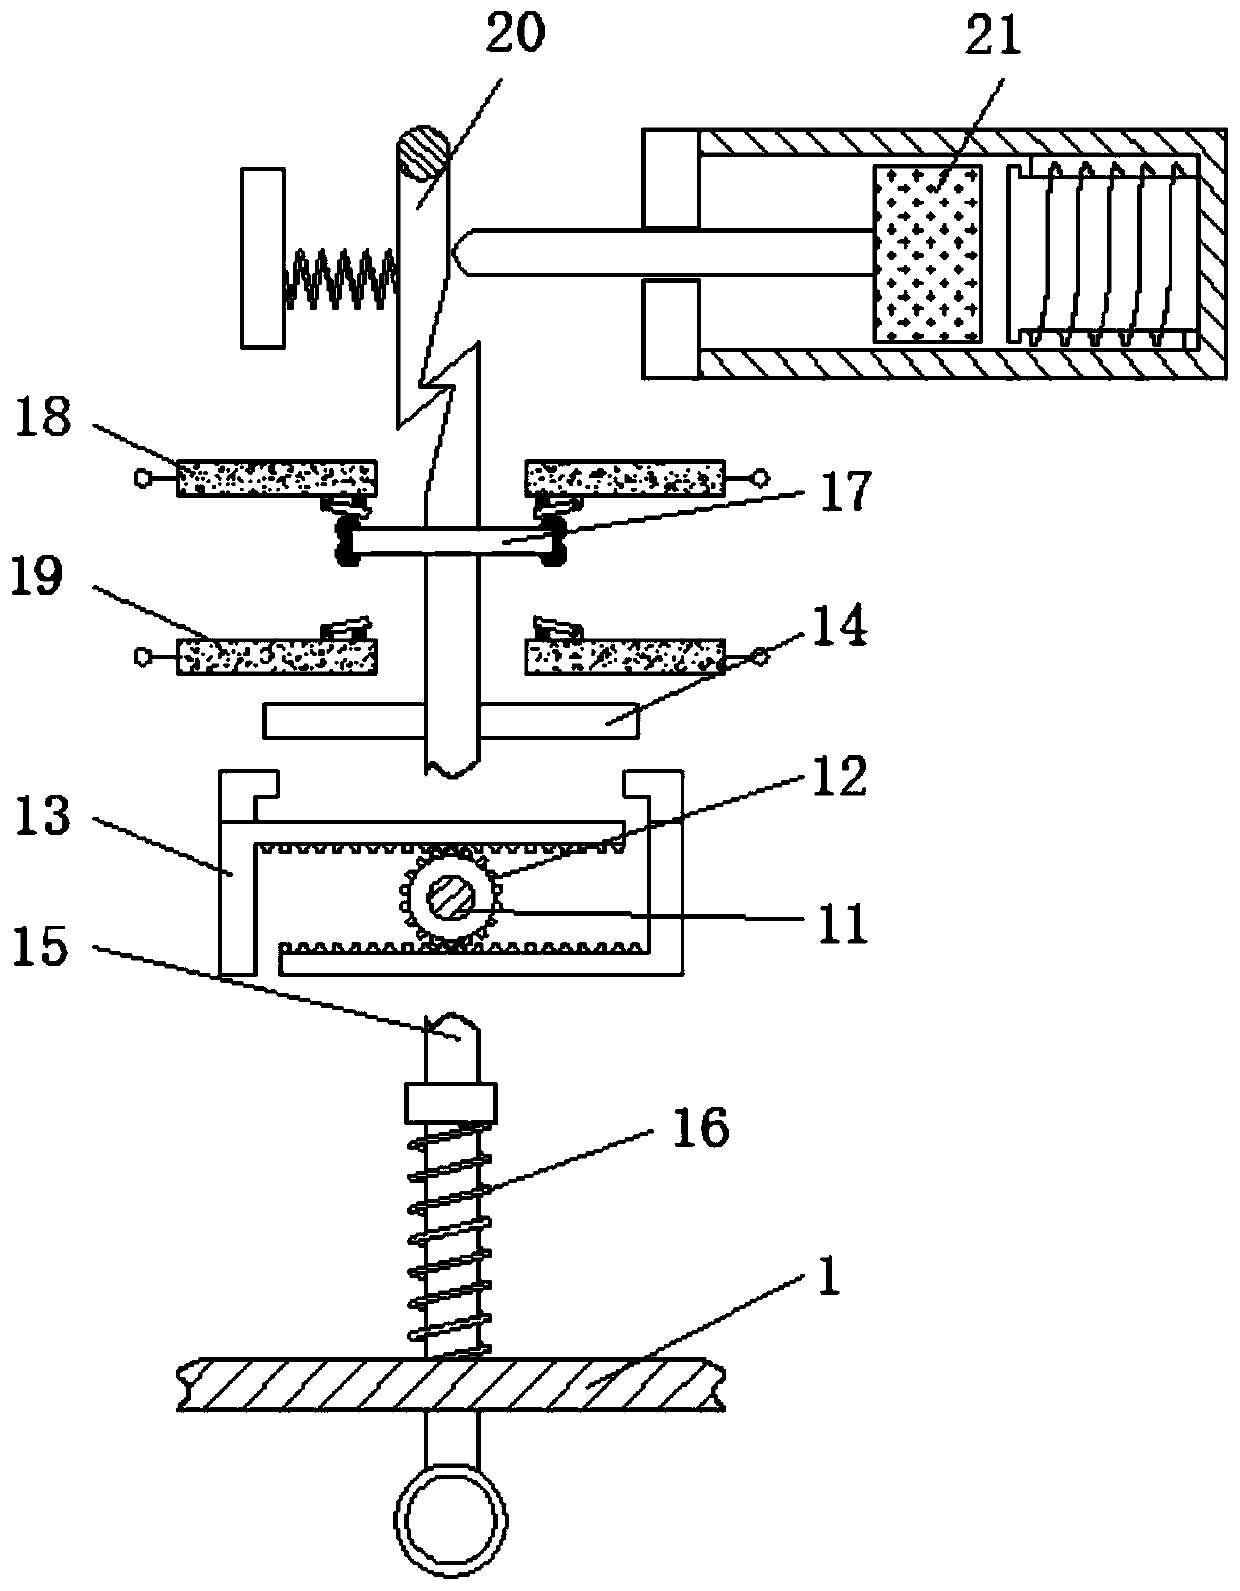 Alternating current distribution equipment automatic control device based on bimetallic strip principle